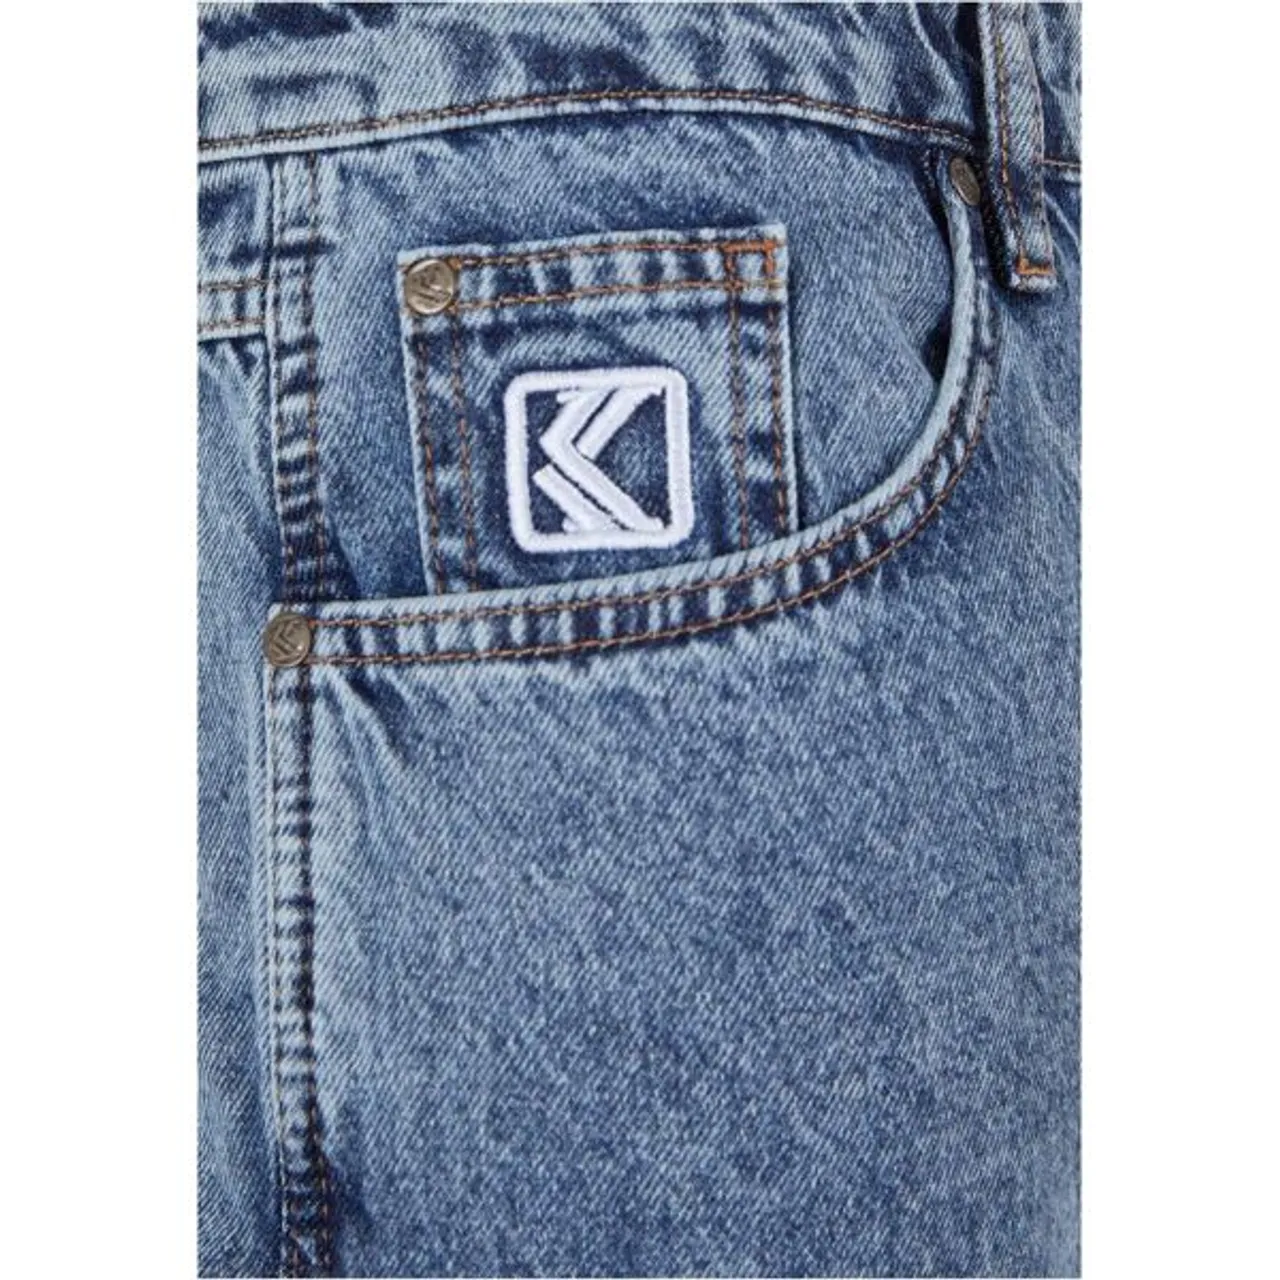 Bequeme Jeans KARL KANI "Karl Kani Herren" Gr. 38, Normalgrößen, vintage mid blue Herren Jeans